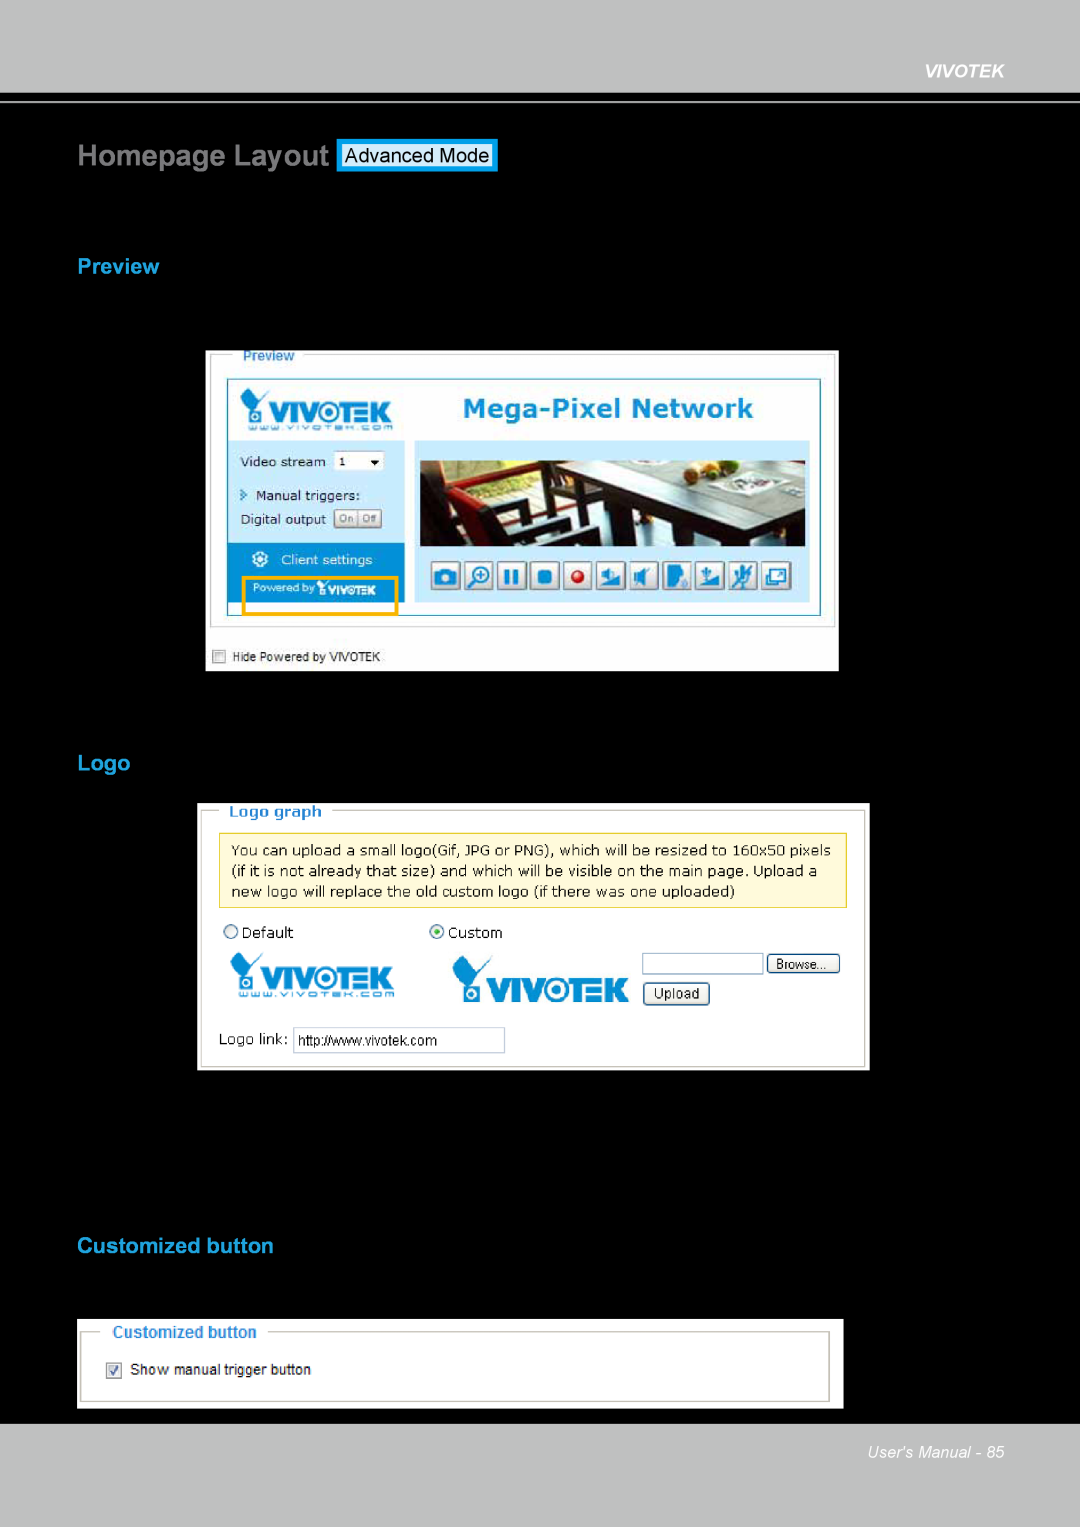 Vivotek IP8361 user manual Homepage Layout, Preview, Logo, Customized button 